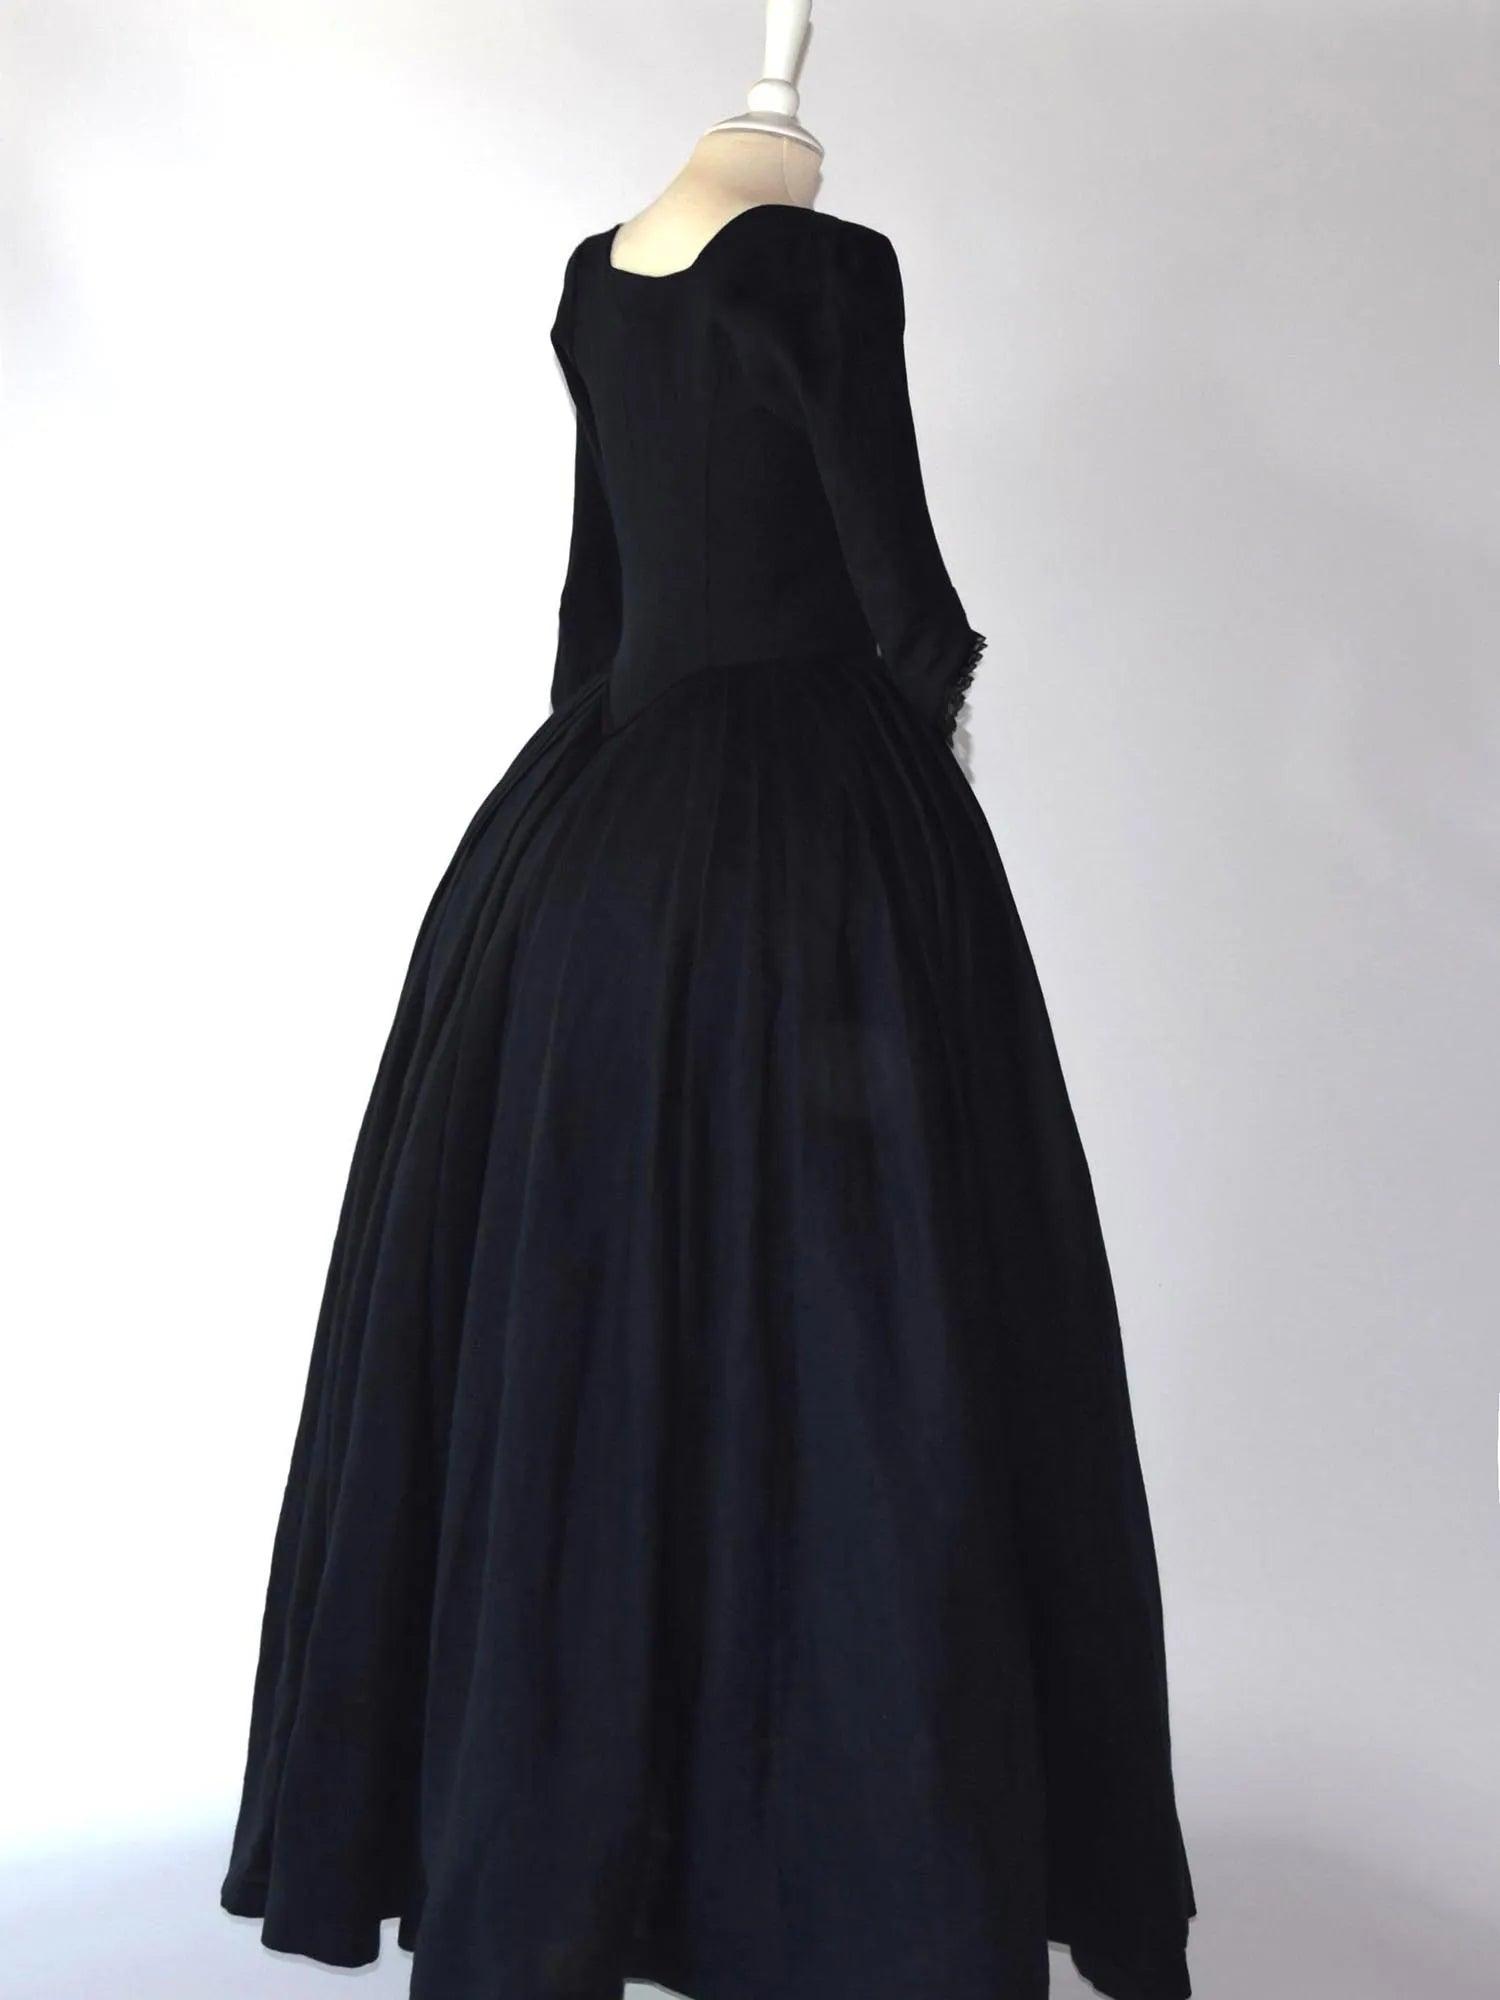 LOUISE, 18th-Century Dress In Black Linen - Atelier Serraspina